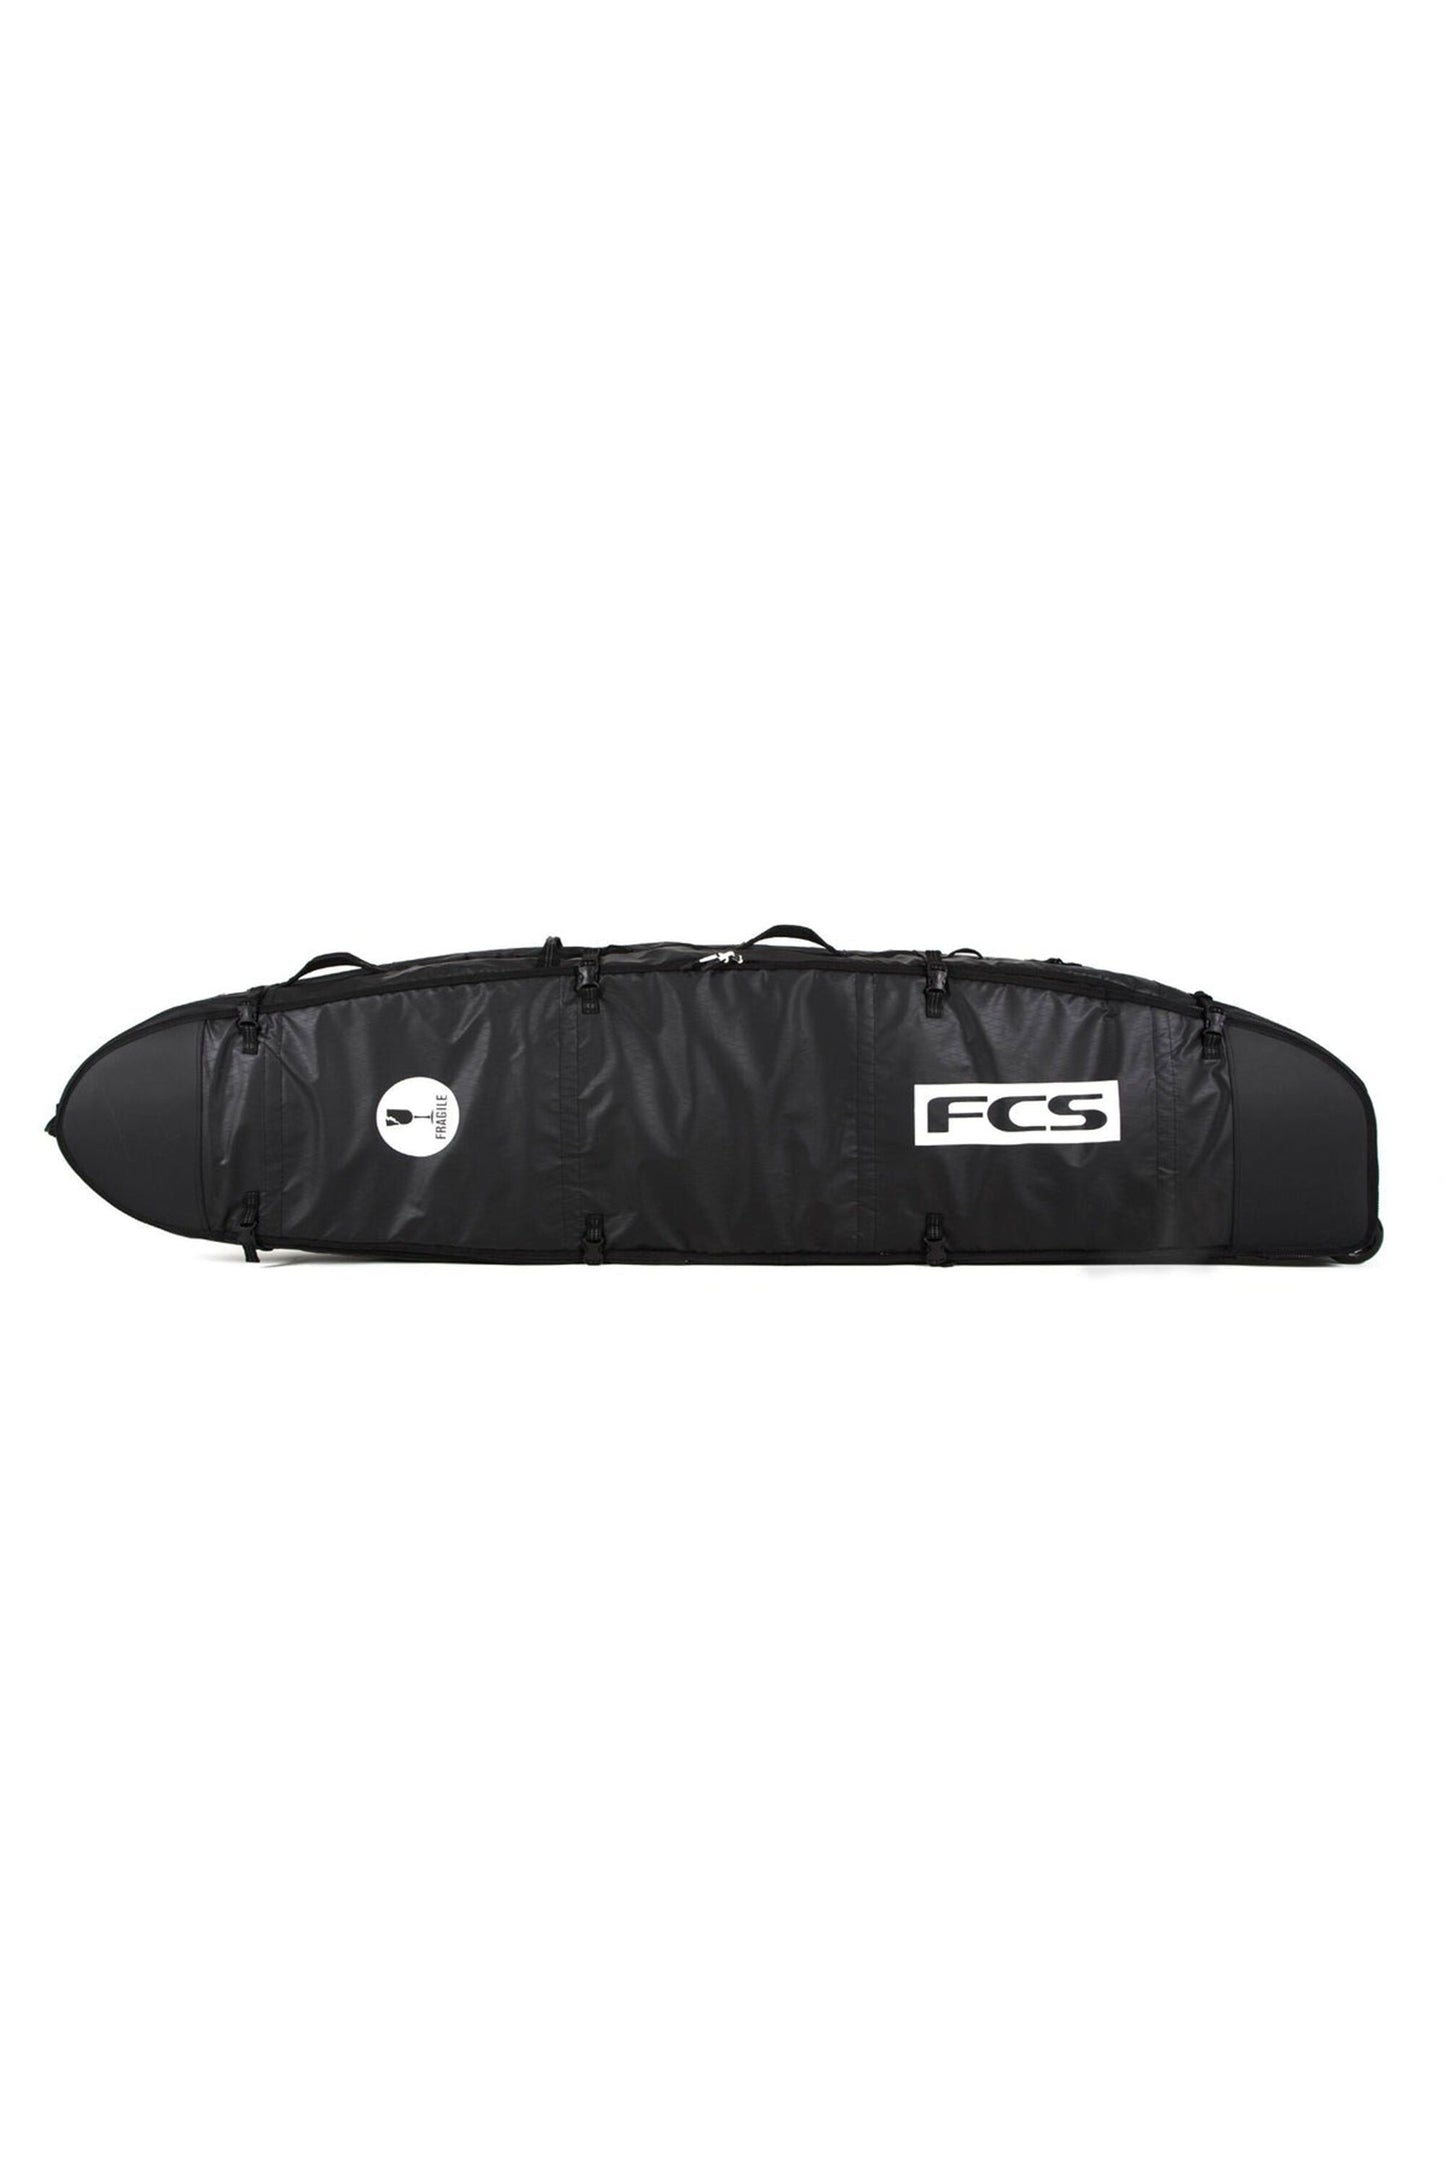    Pukas-Surf-Shop-FCS-Boardbags-travel-3-Wheelie-Black